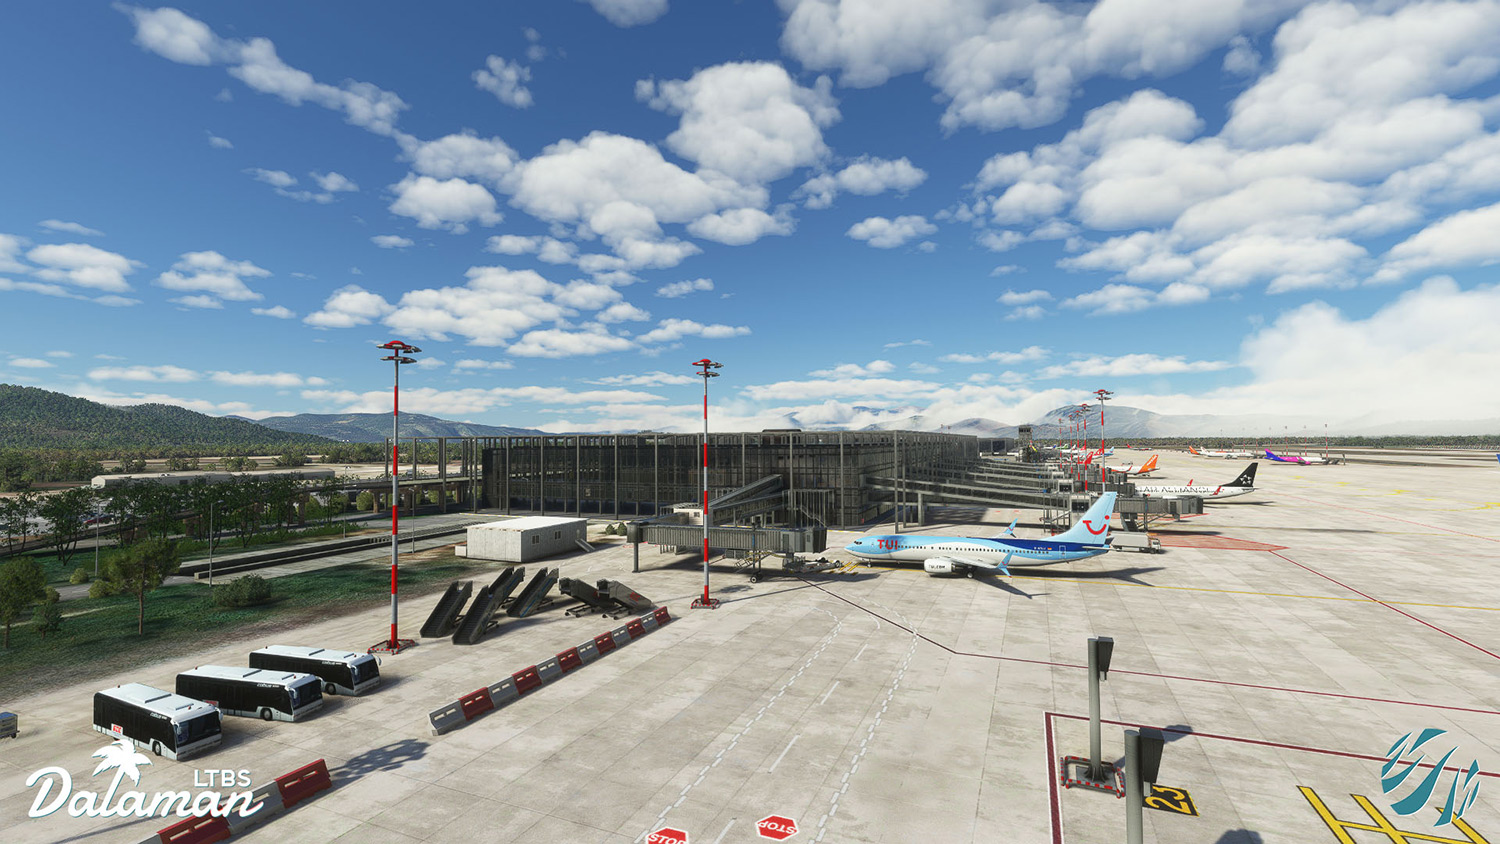 MM Simulations - LTBS - Dalaman International Airport